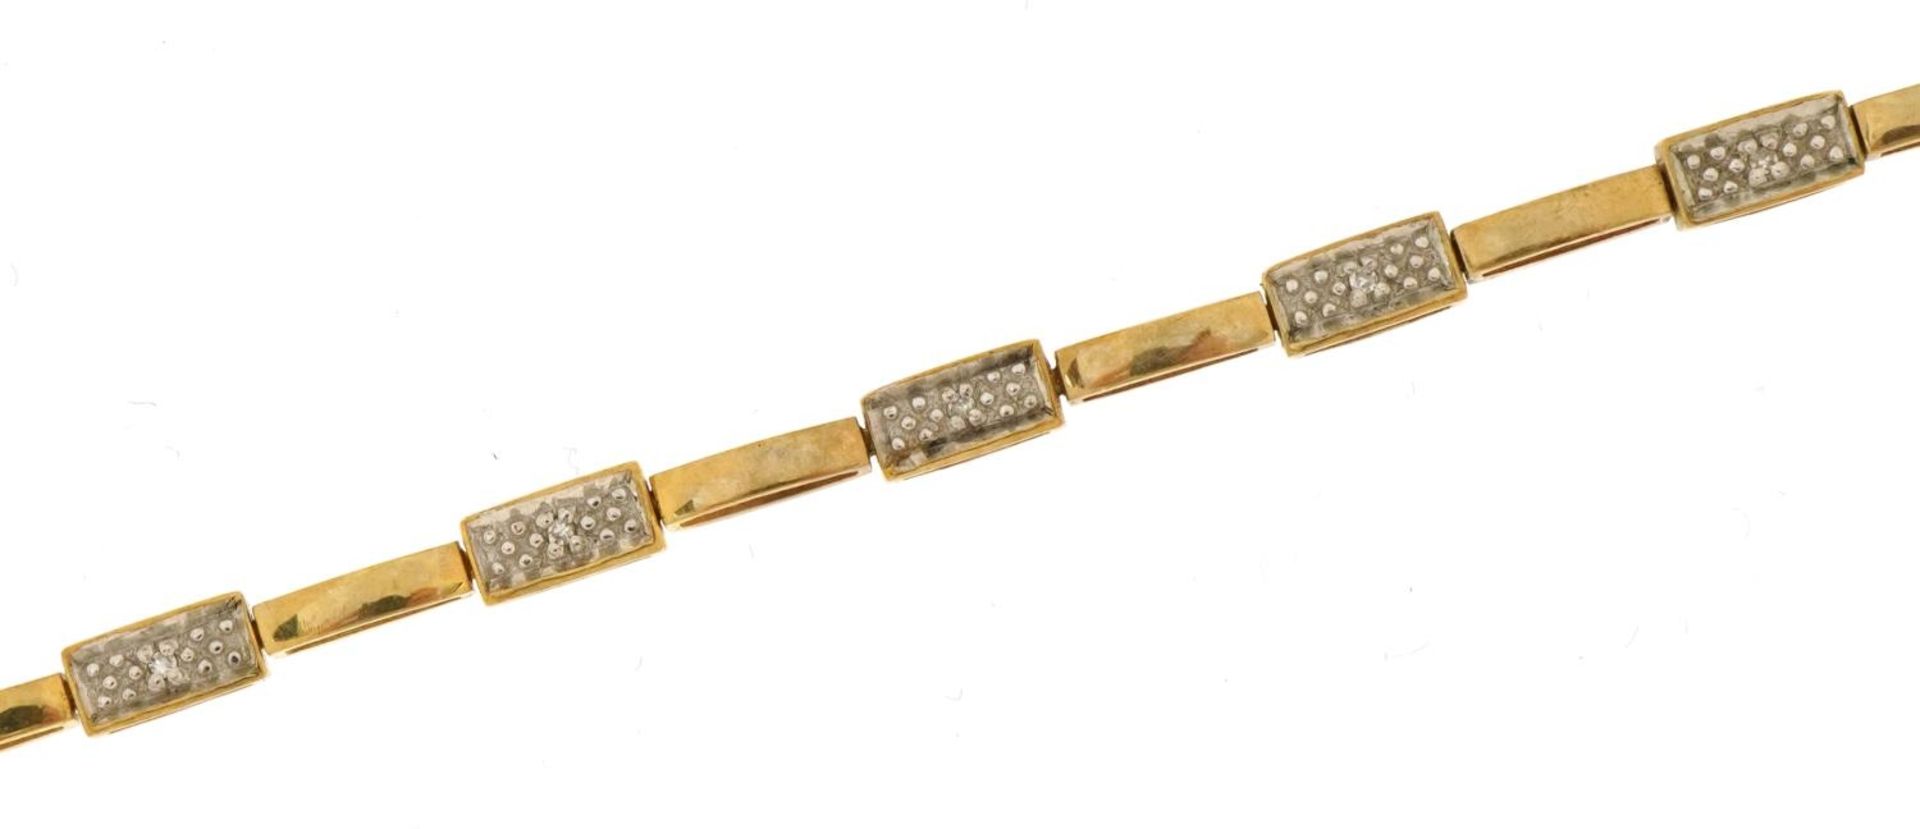 9ct gold bracelet set with diamonds, 19cm in length, 5.9g